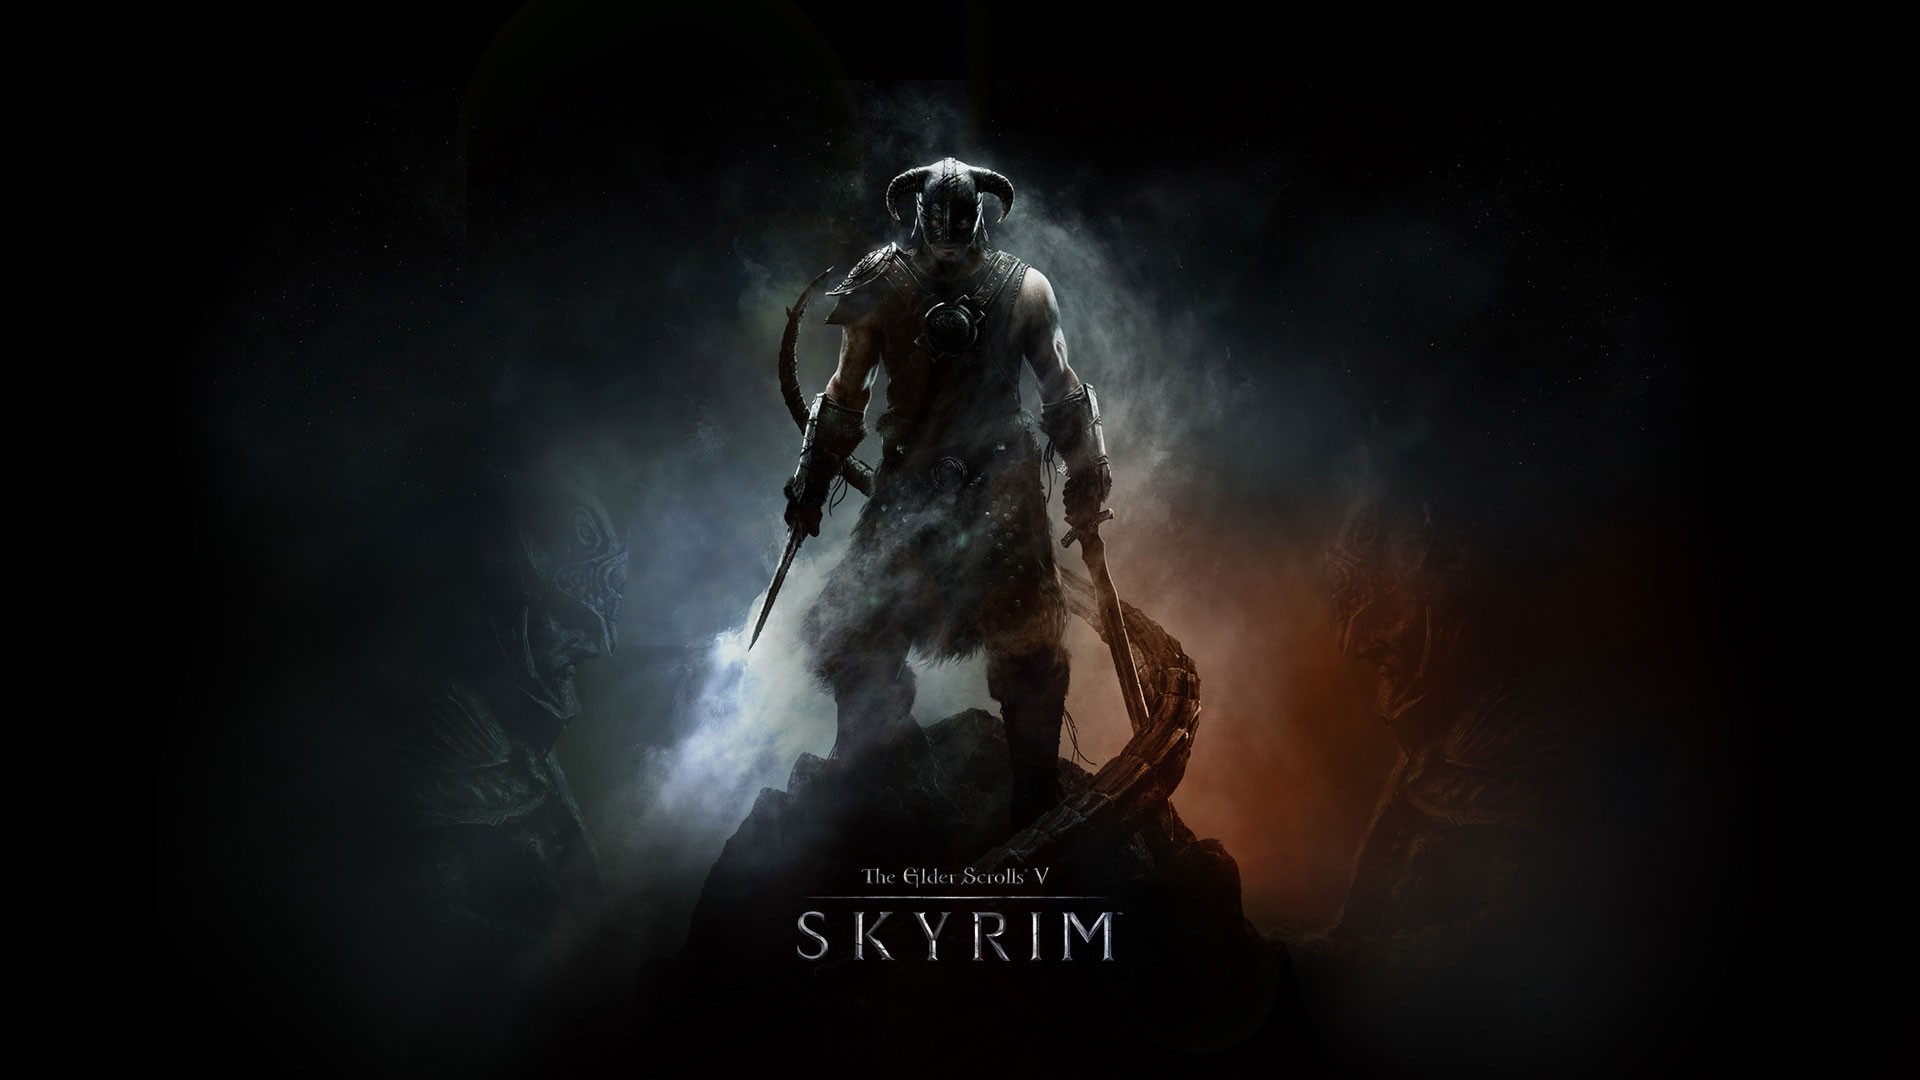 The Elder Scrolls V: Skyrim, Sword, Dragonborn Wallpaper